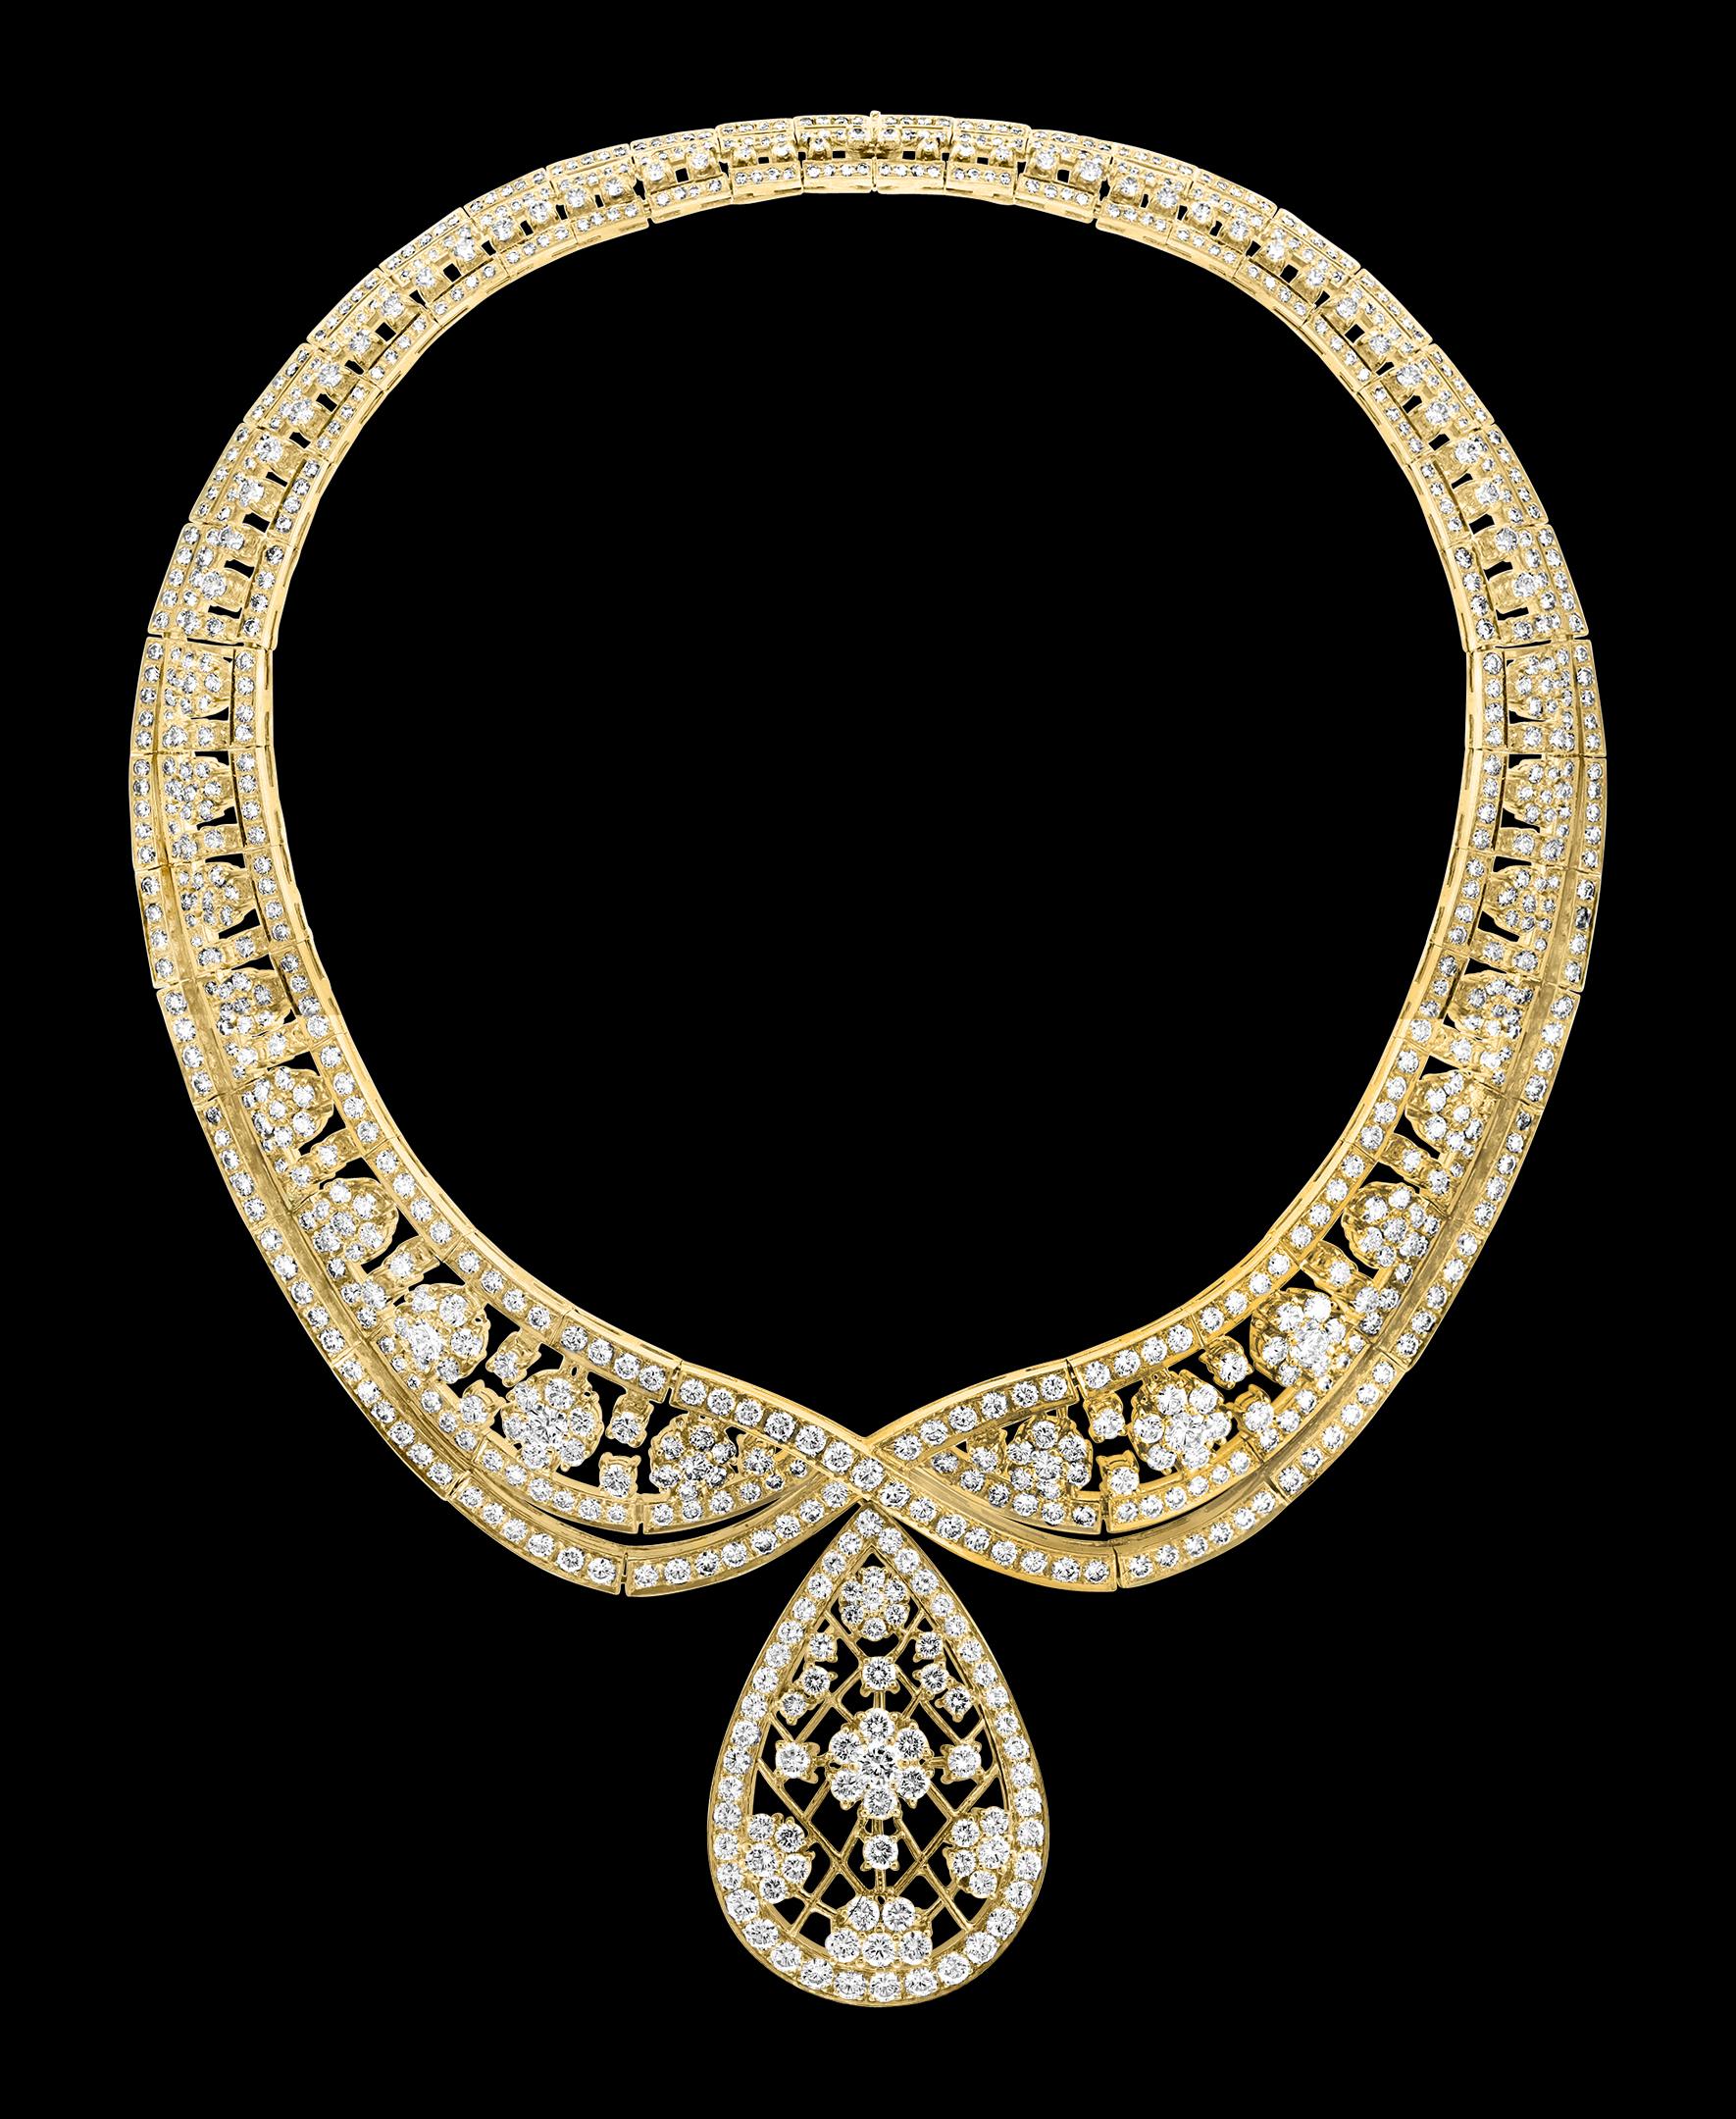 Round Cut 37 Carat Diamond Necklace and Earrings 185 Grams 18 Karat Gold Bridal Suite